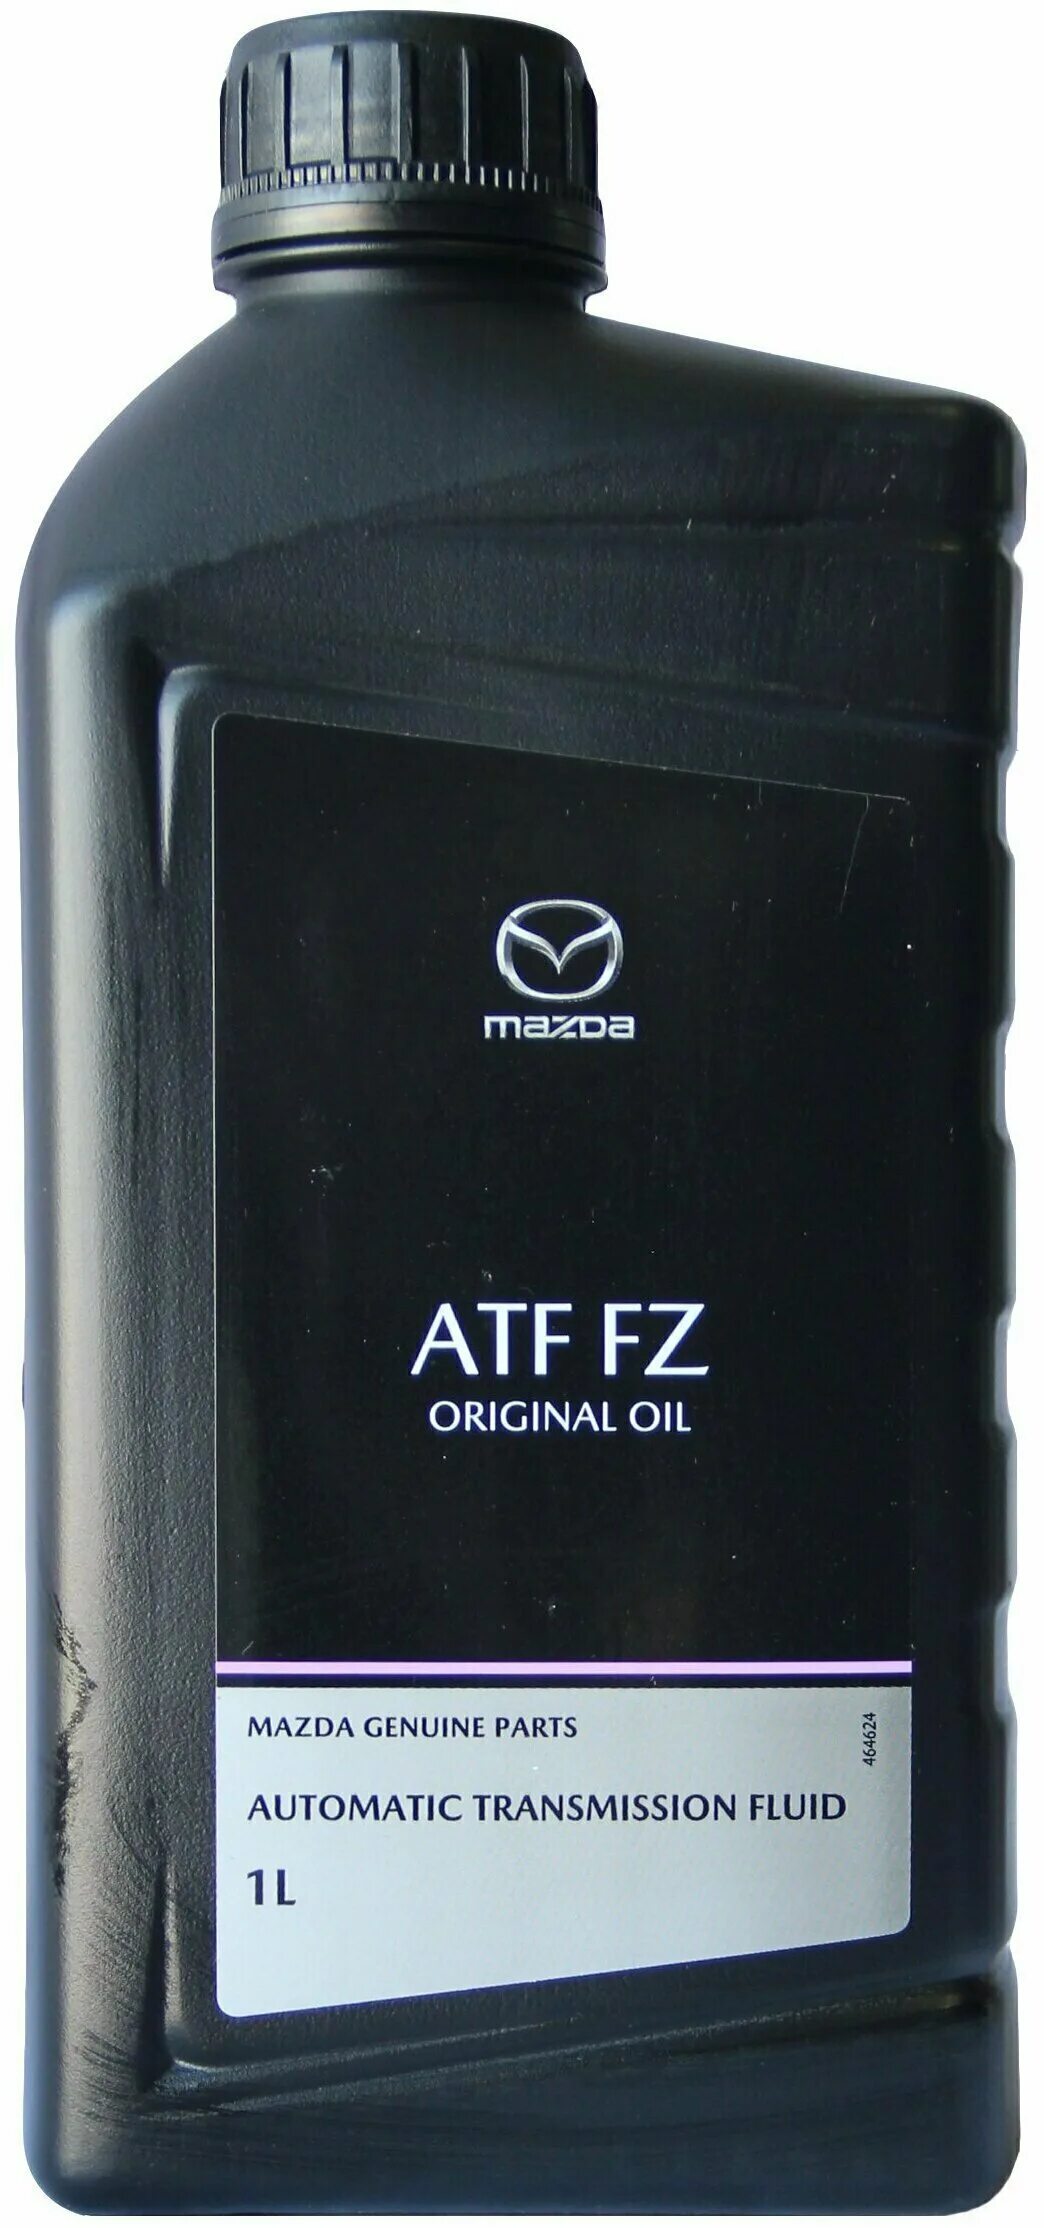 Mazda Original Oil ATF FZ. Mazda Original Oil ATF FZ 1л. ATF FZ Mazda цвет масла. Mazda 8300771773. Масло трансмиссионное atf fz